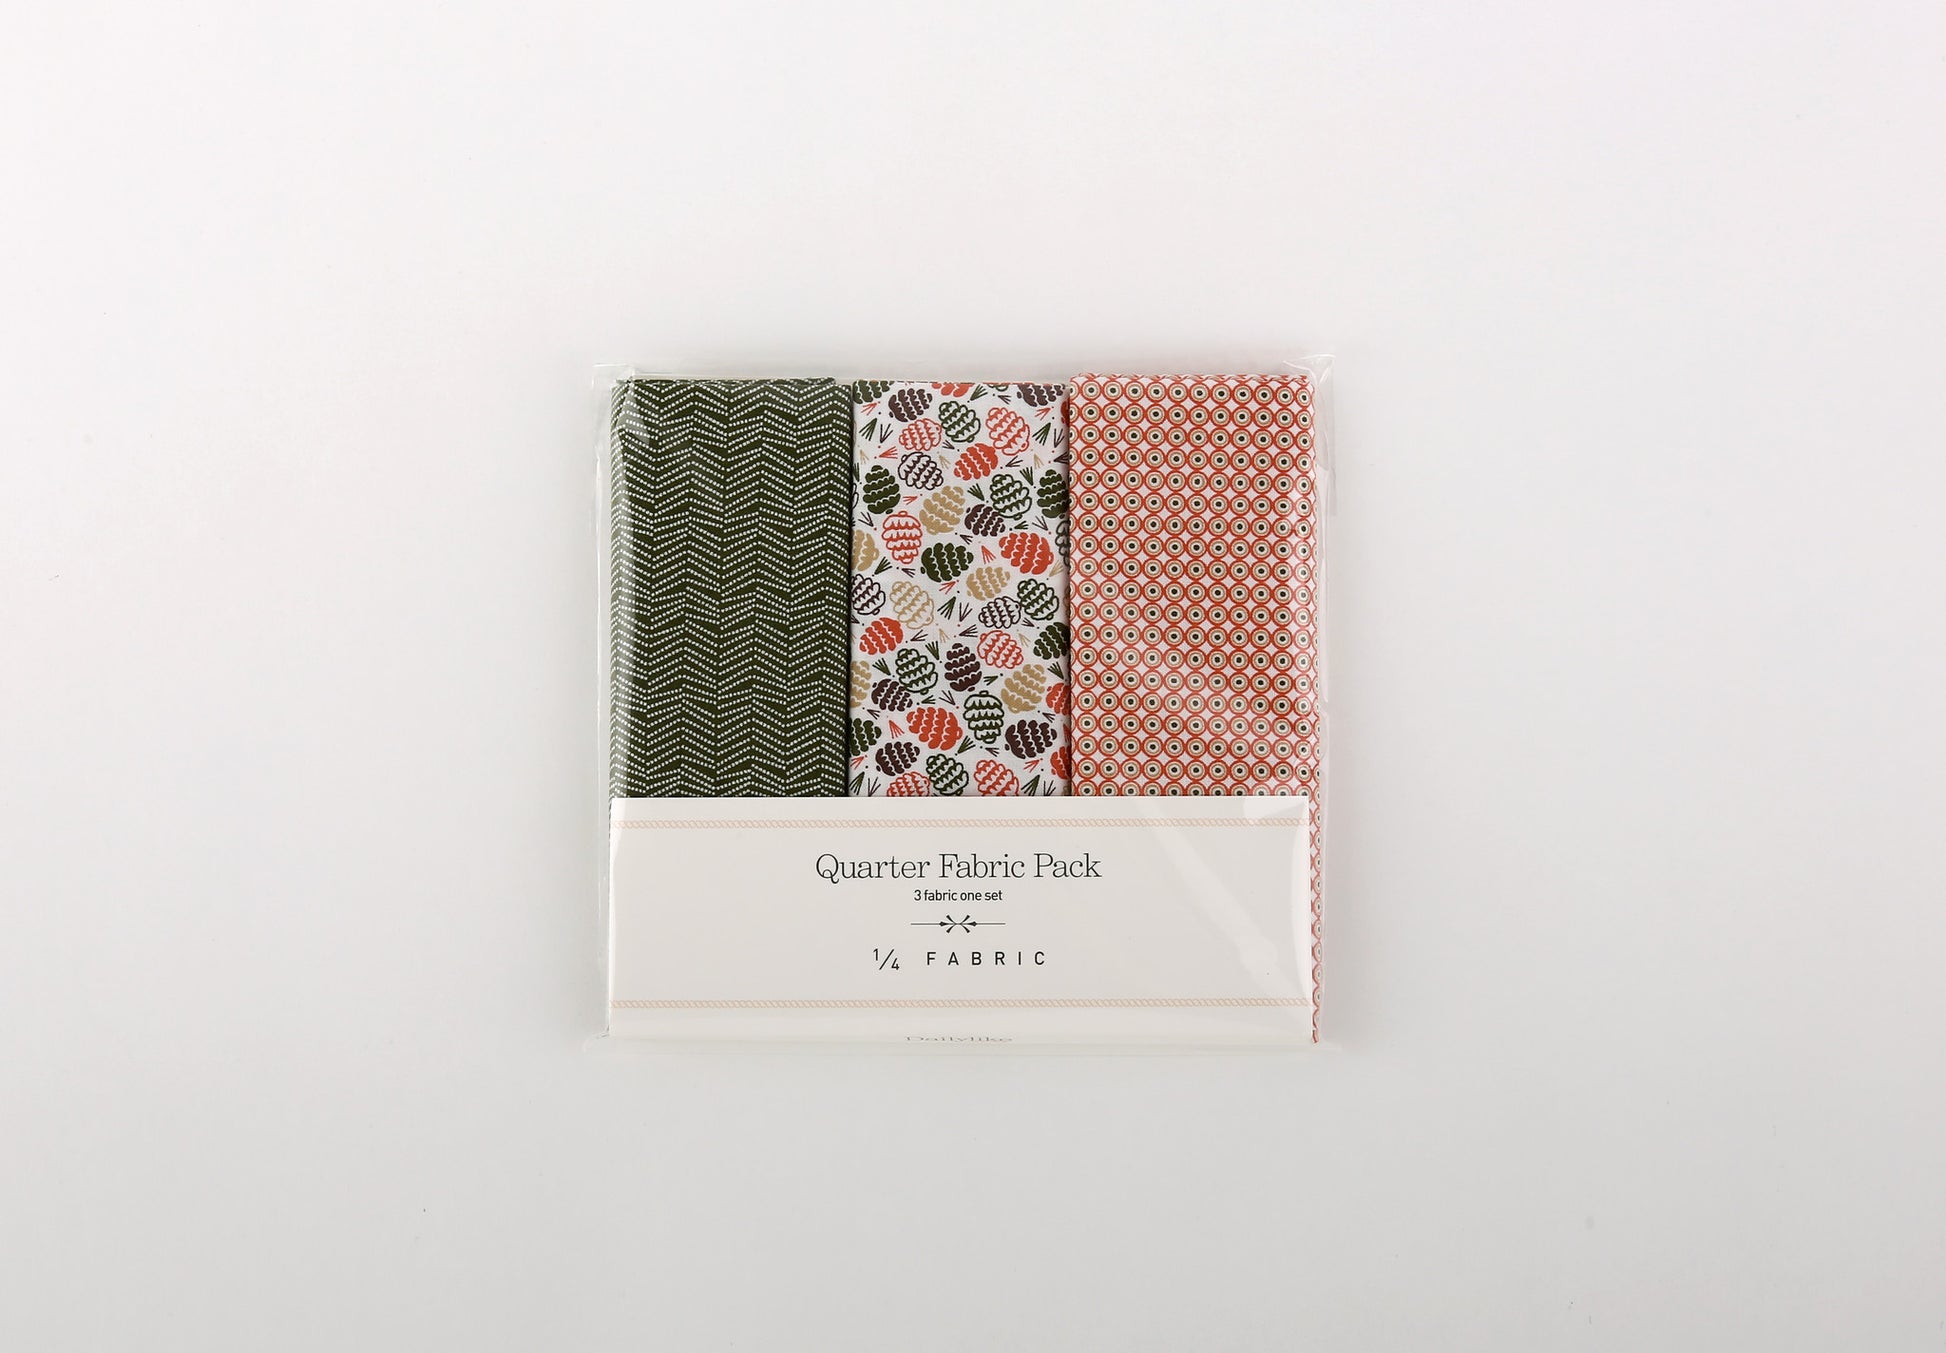 Quarter Fabric Pack - Cotton, Dailylike "Pine" - KEY Handmade
 - 5